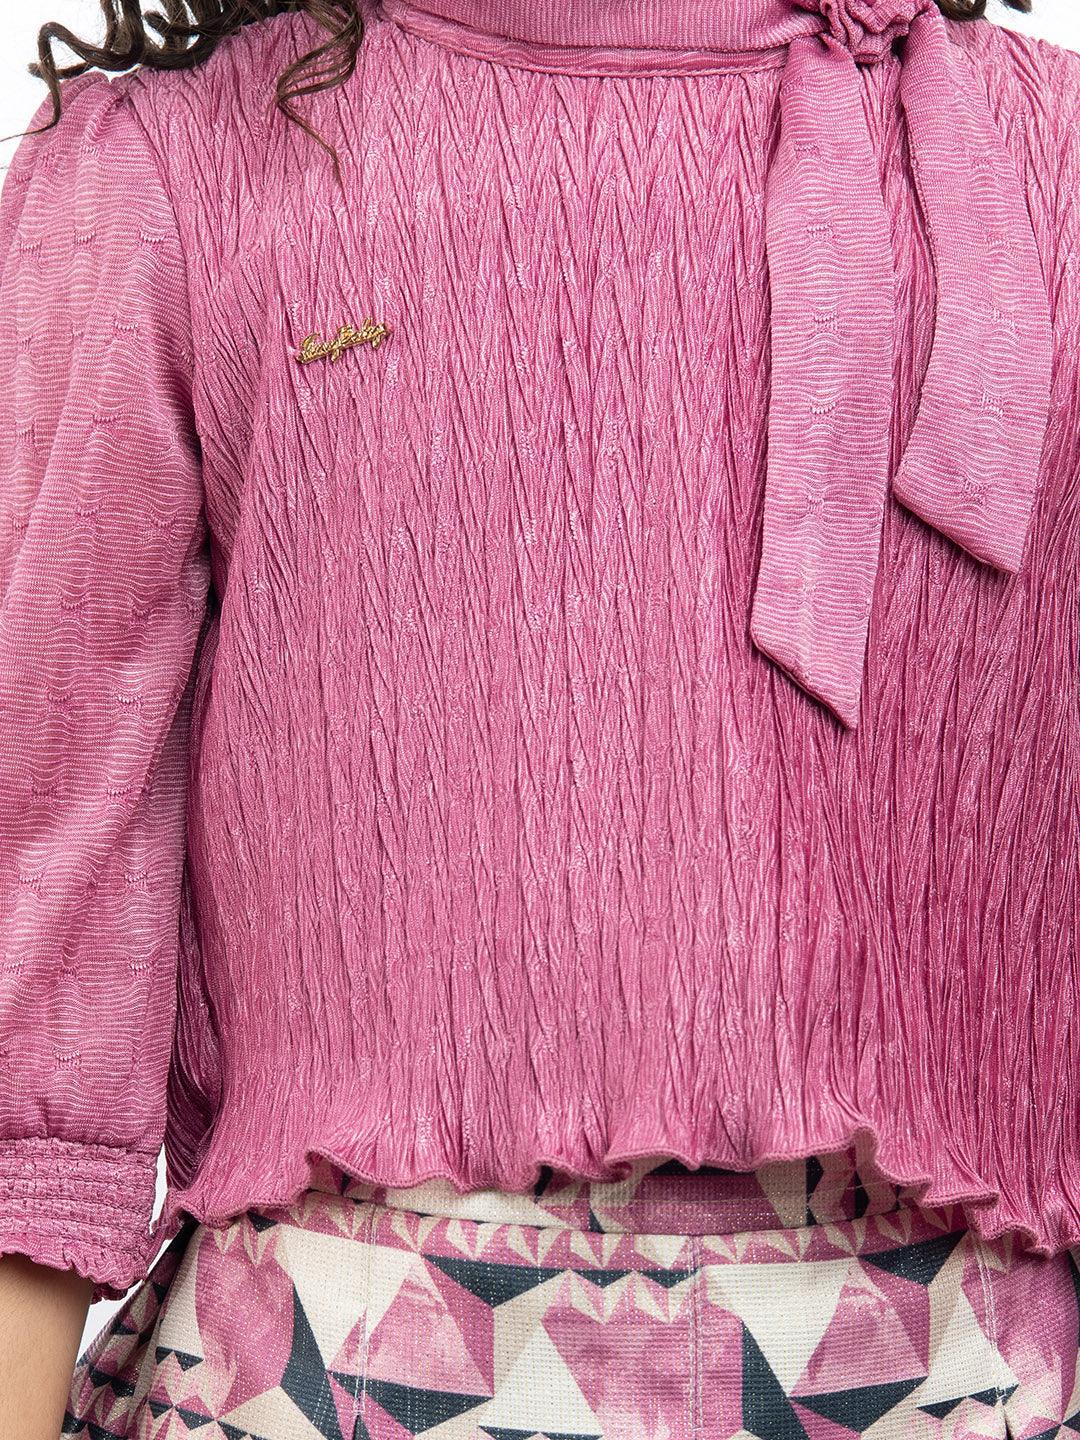 Tiny Baby Fuschia Colored Skirt Top Set - 2122 Fuschia - TINY BABY INDIA shop.tinybaby.in